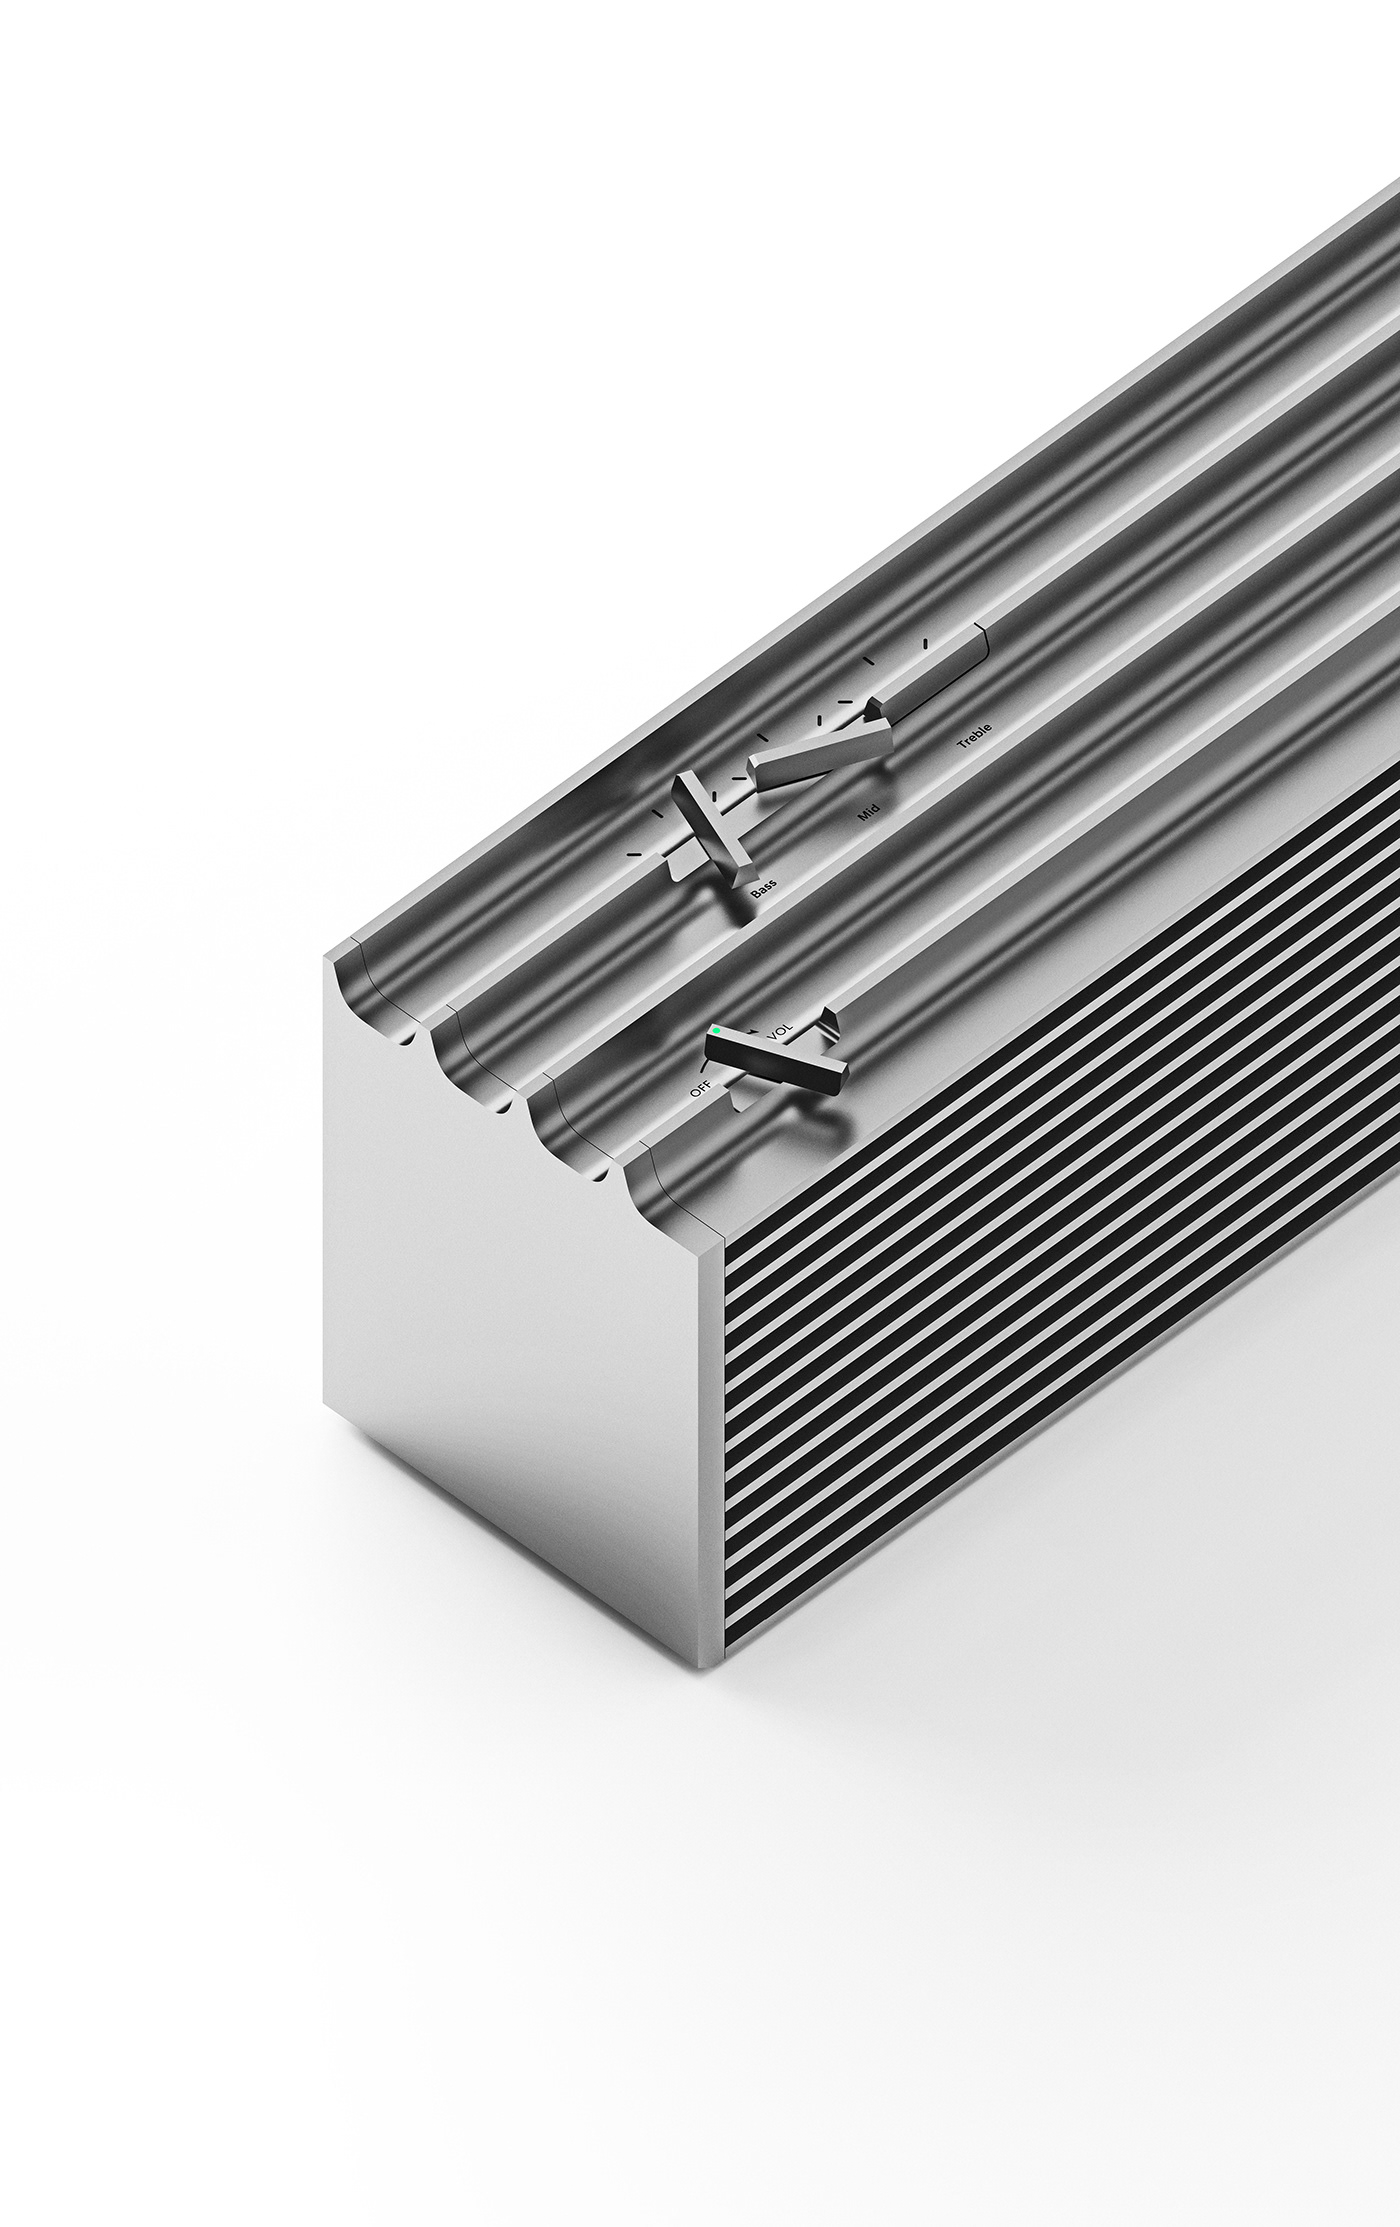 bluetooth speaker sound pattern aluminium productdesign product industrialdesign metal control